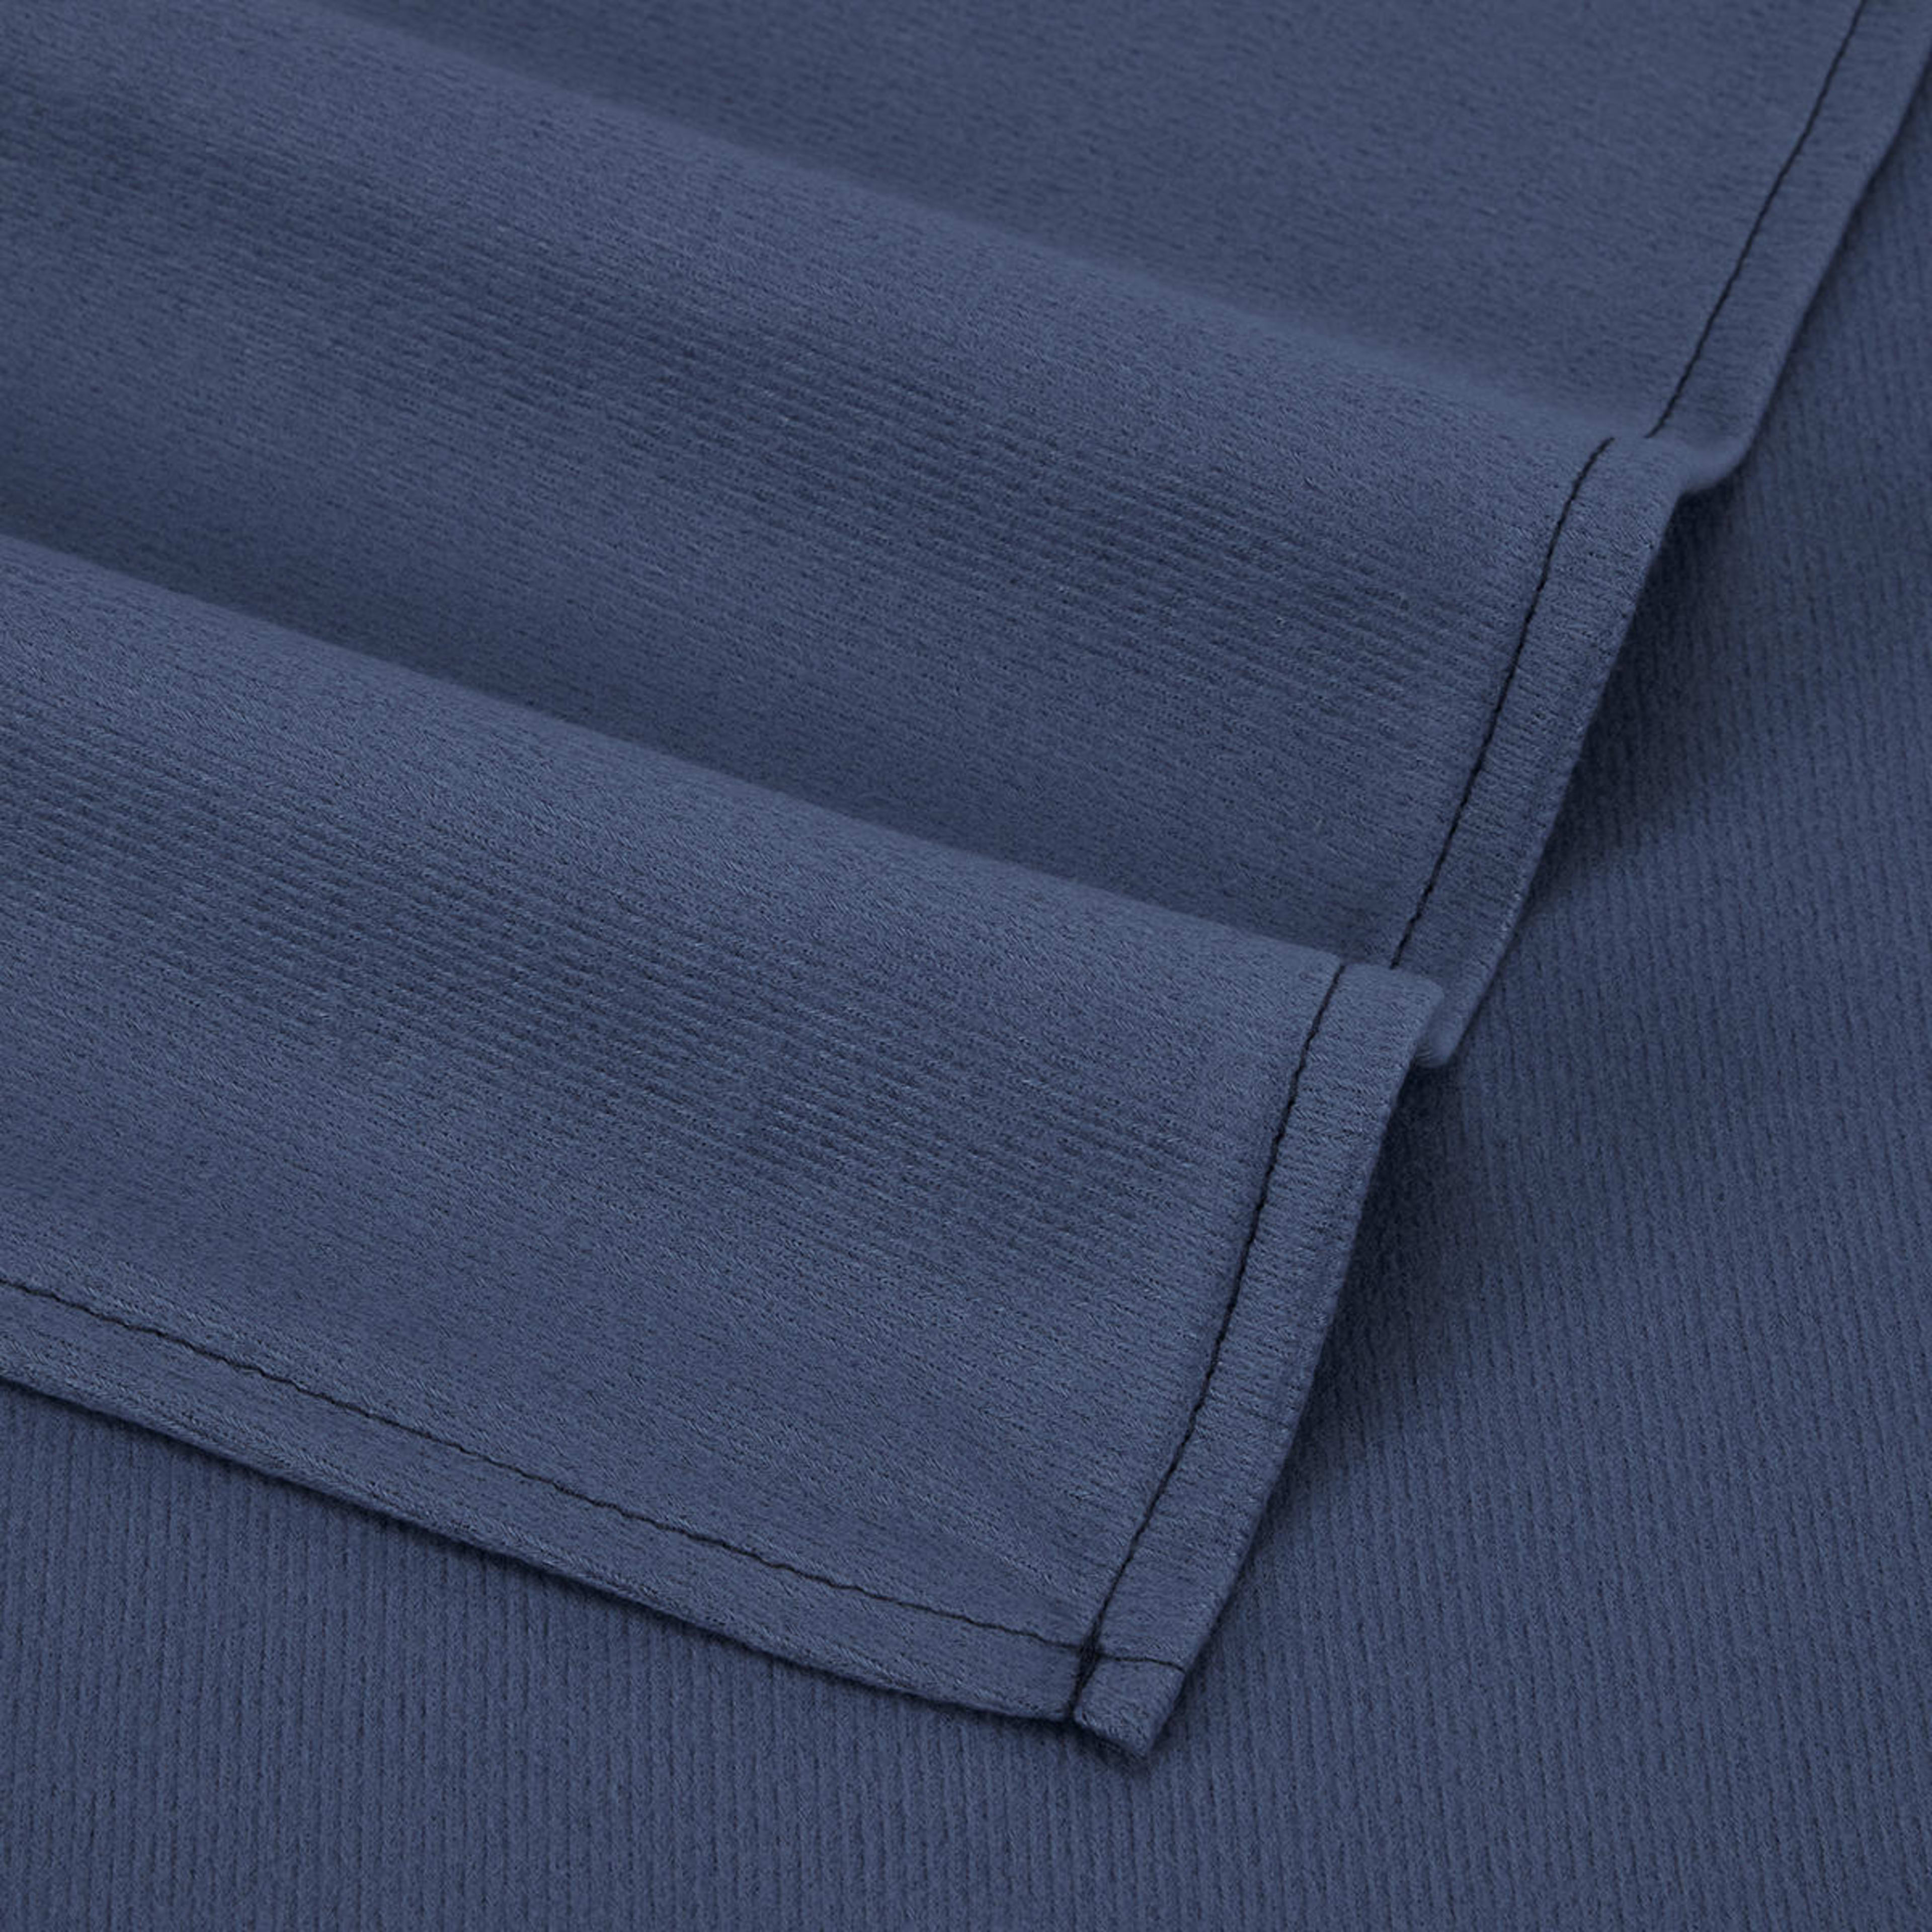 Soft Touch Sheet Set - Double Bed, Blue - Kmart